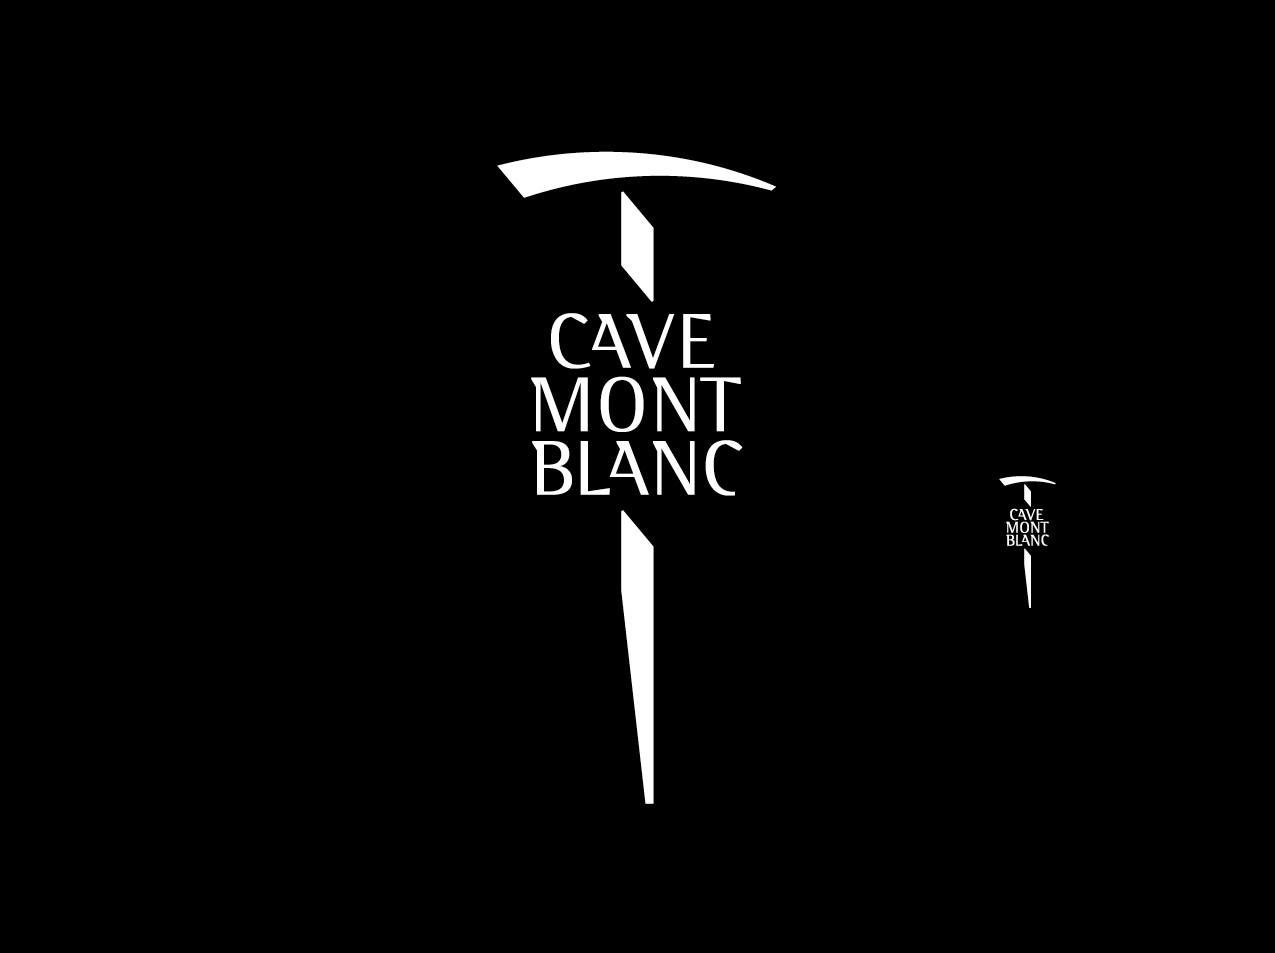 Cave Mont Blanc presentation